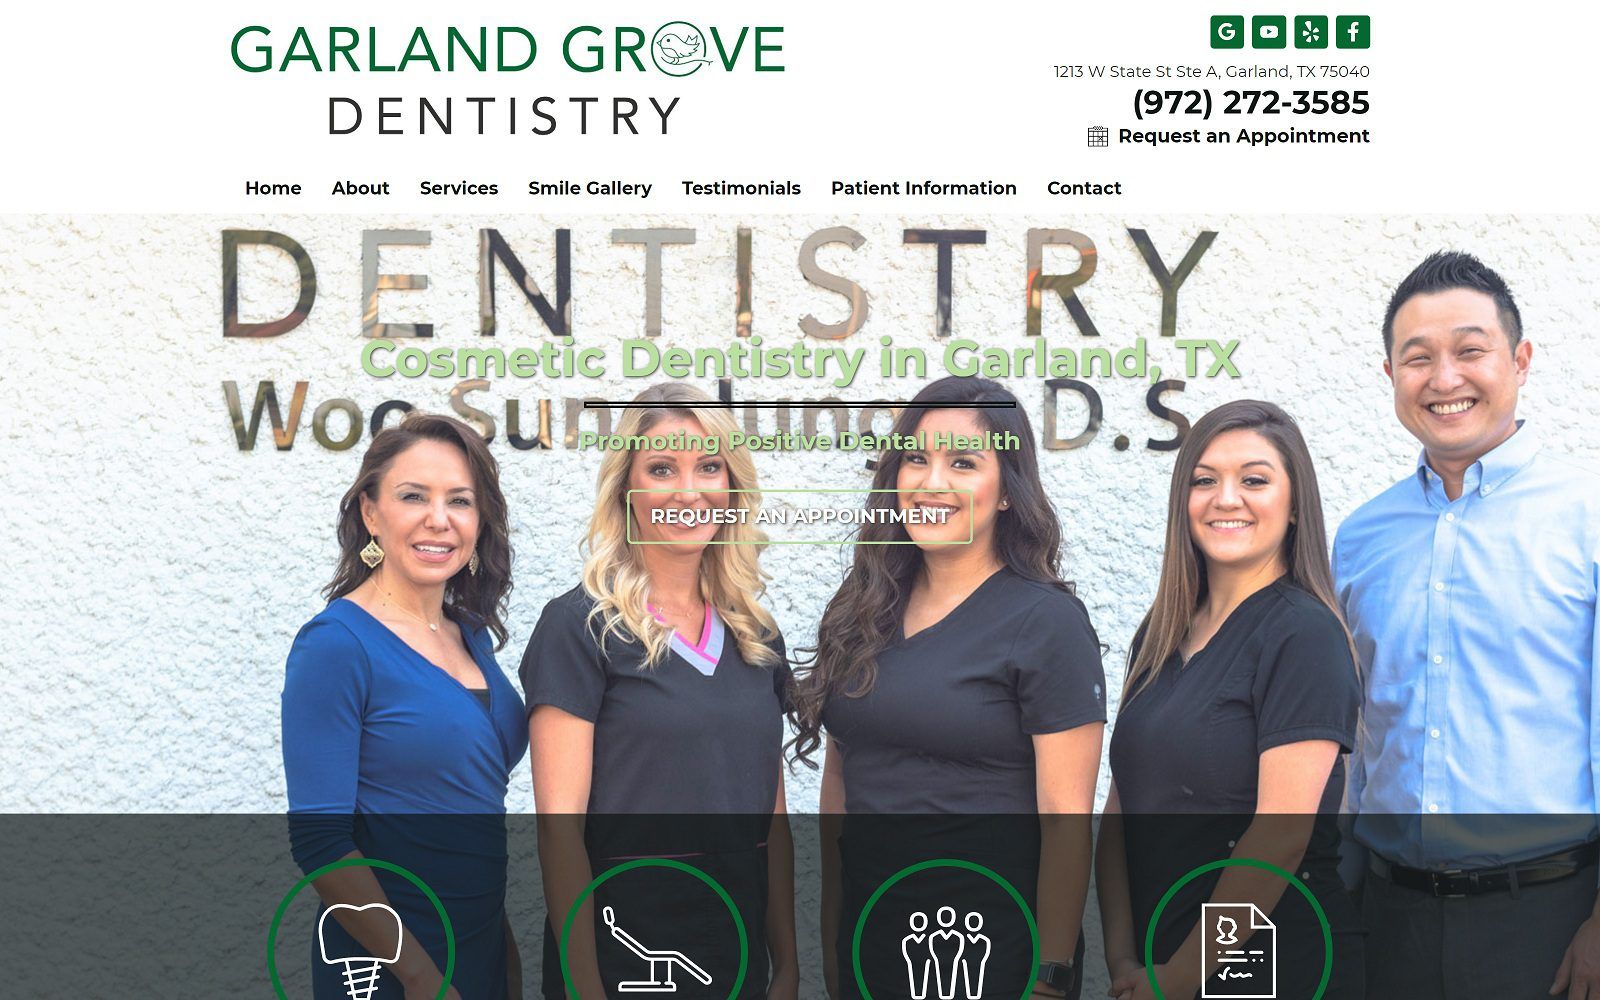 The screenshot of garland grove dentistry website